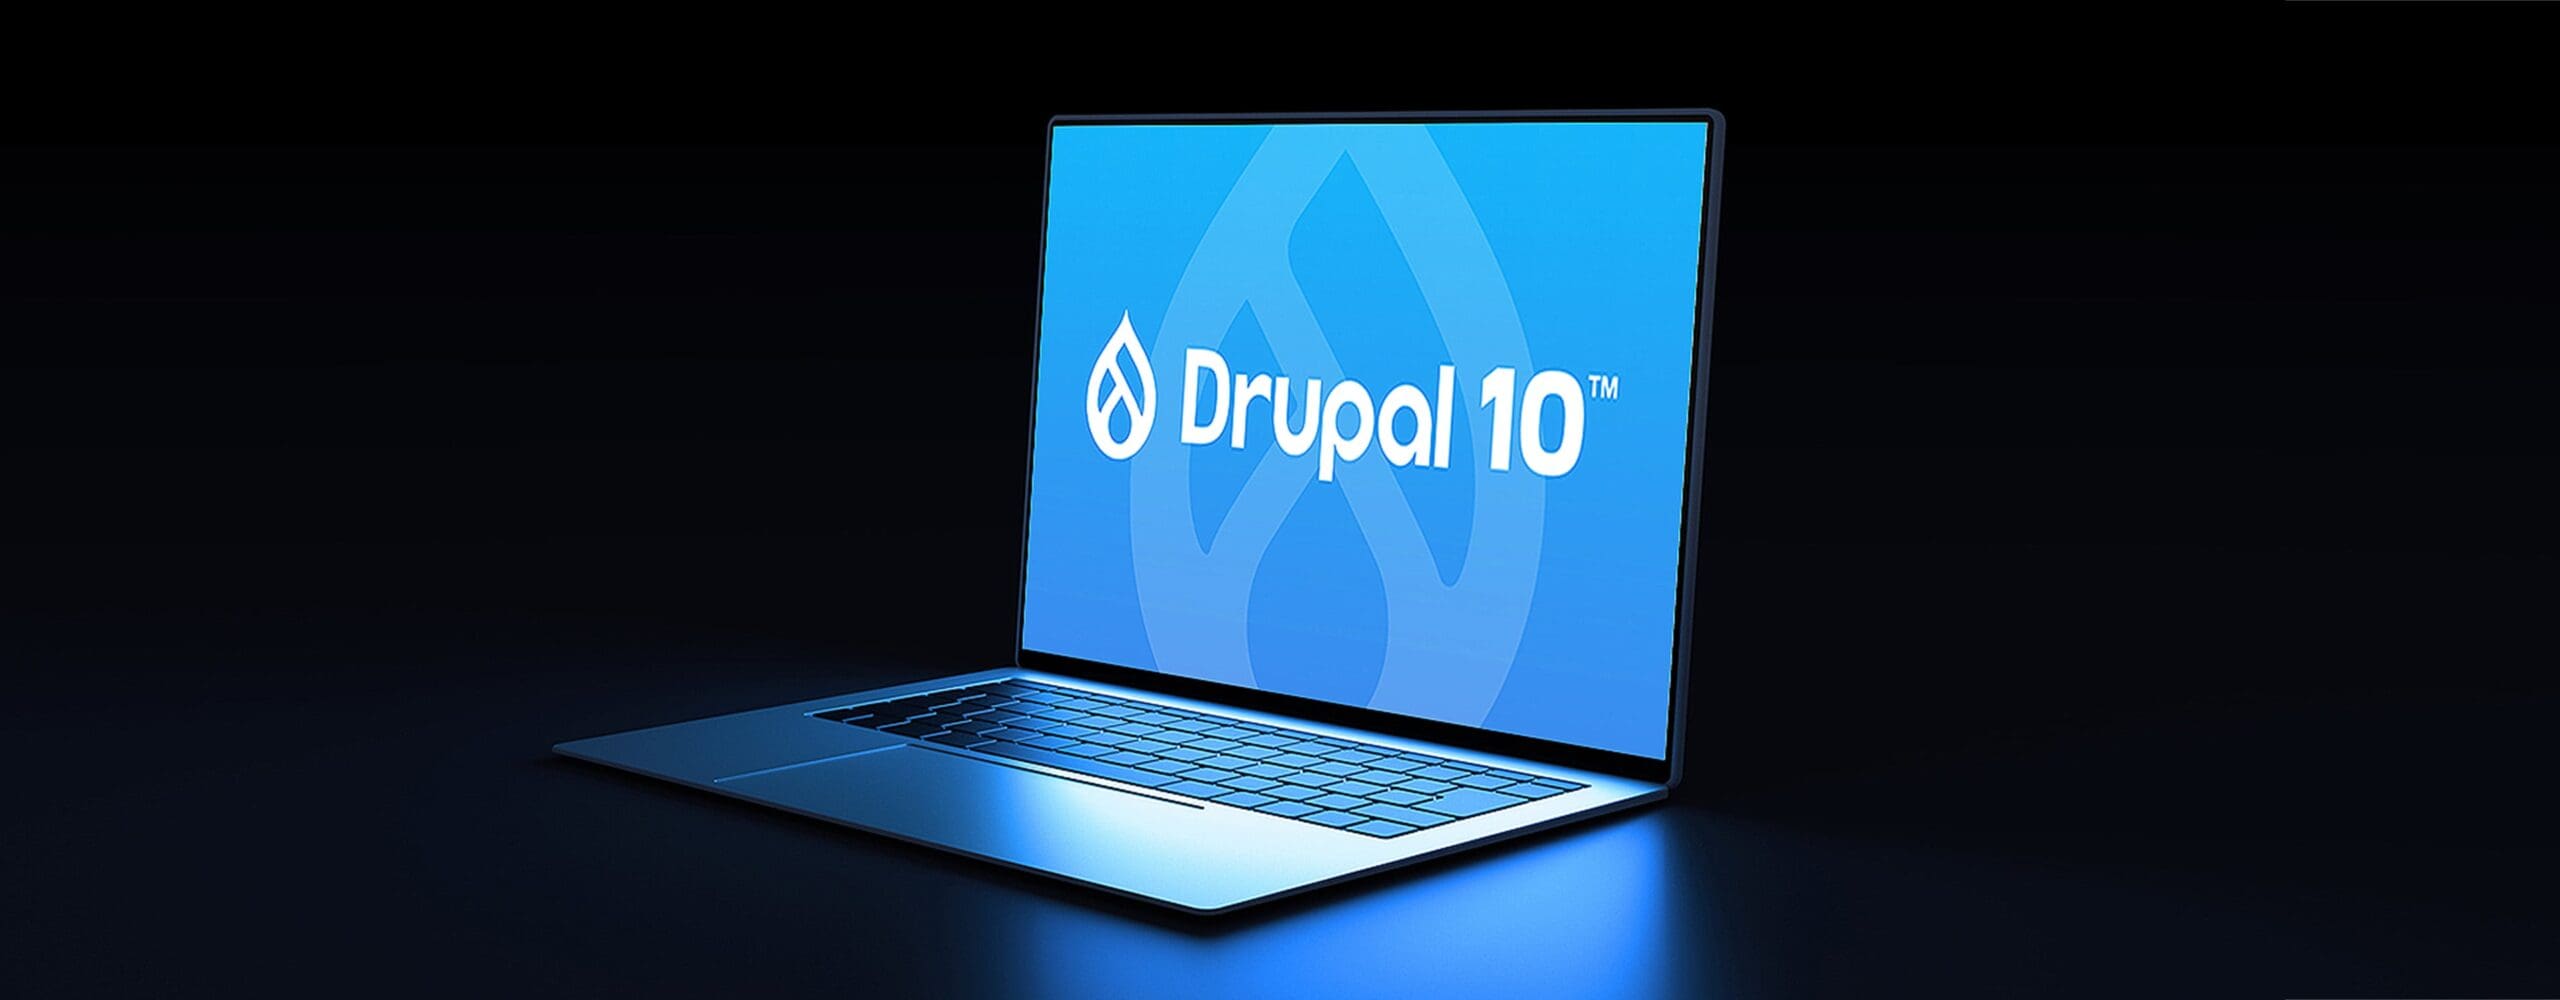 Drupal-10